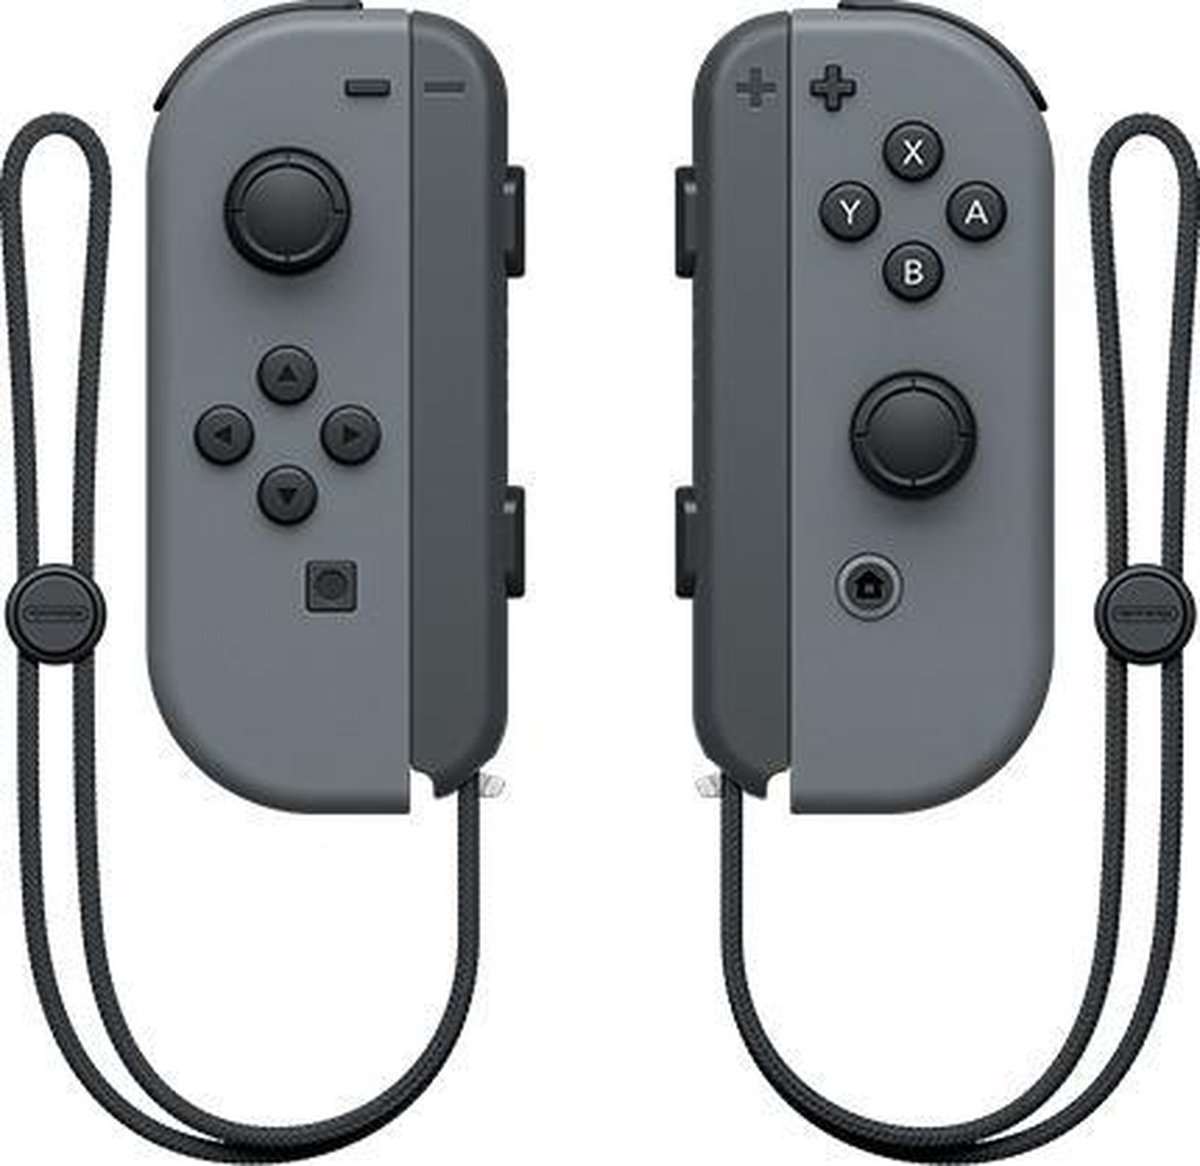 Nintendo Switch Joy-Con Controller paar - Grijs - Nintendo